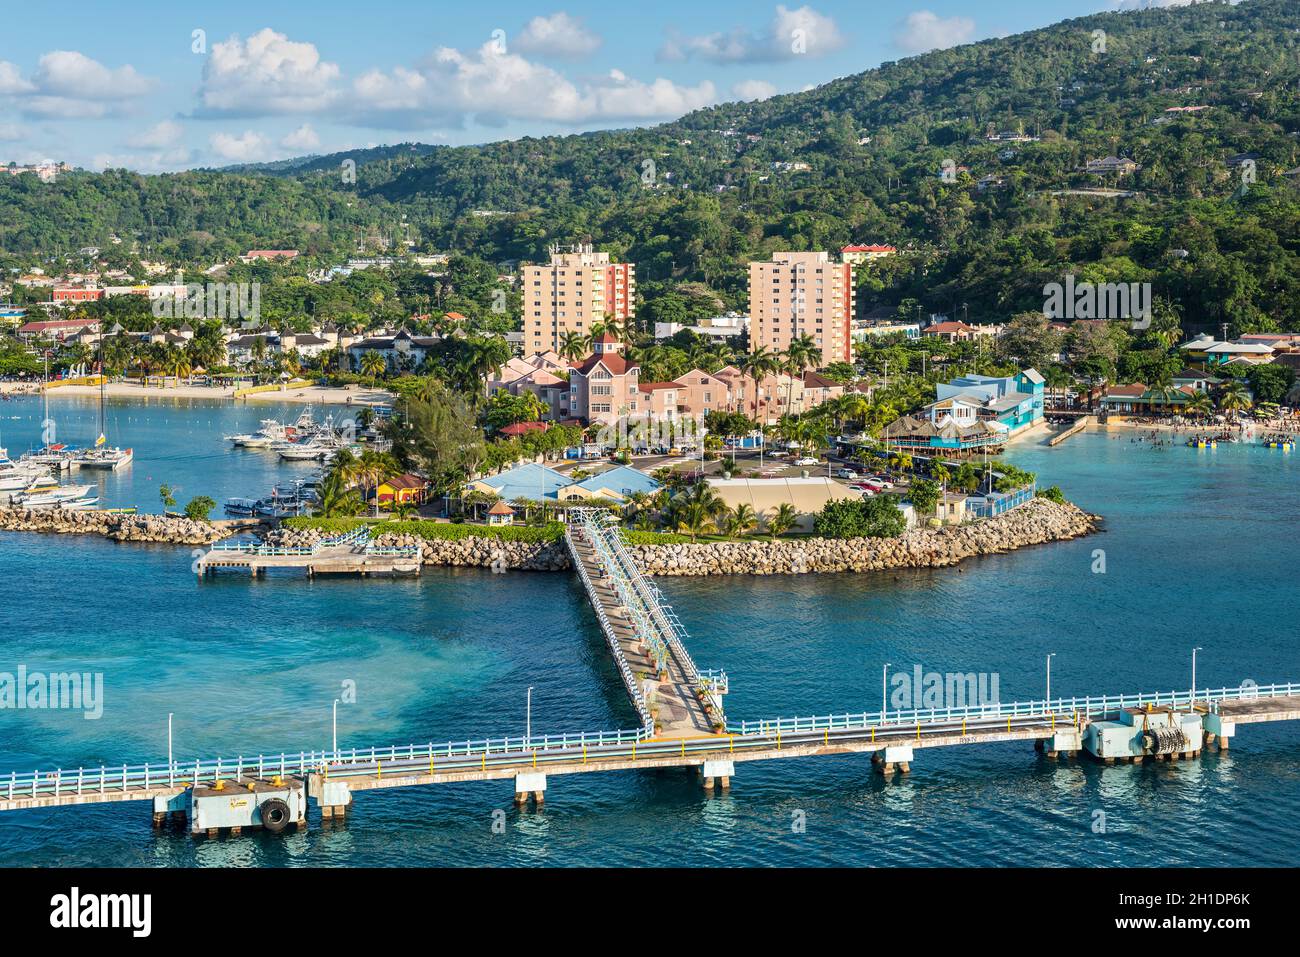 Ocho Rios, Jamaica - April 22, 2019: View from the ship to the Cruise terminal in the tropical Caribbean island of Ocho Rios, Jamaica. Stock Photo